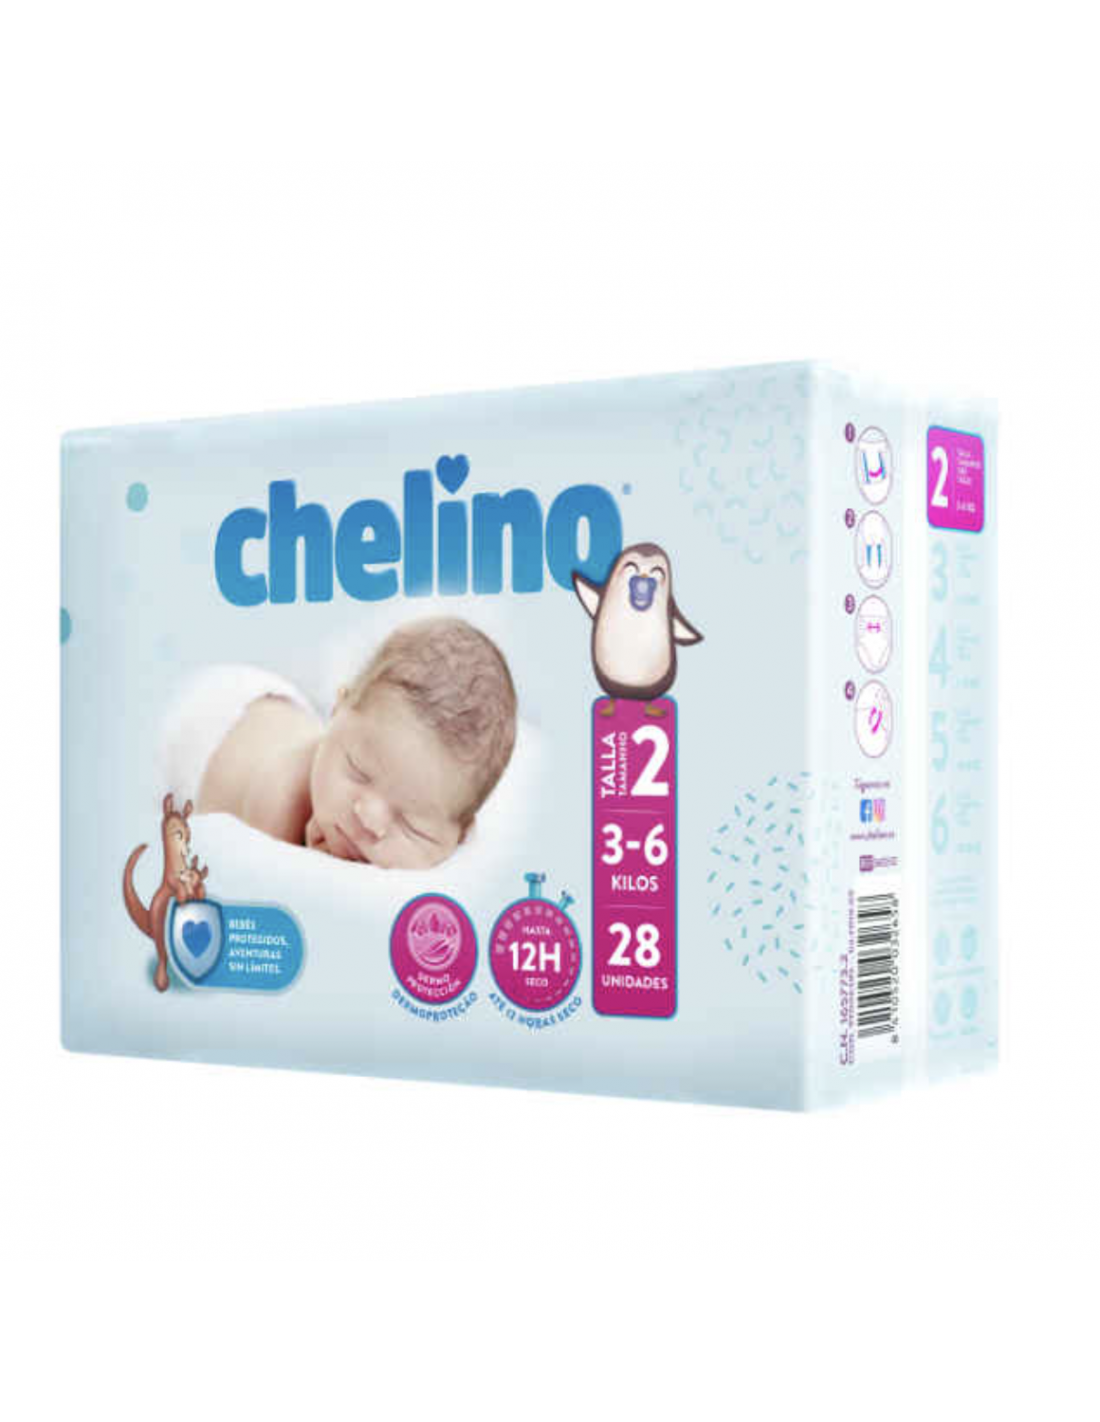 PAÑAL INFANTIL CHELINO TALLA 3 DE 4-10 KG 36 PAÑALES